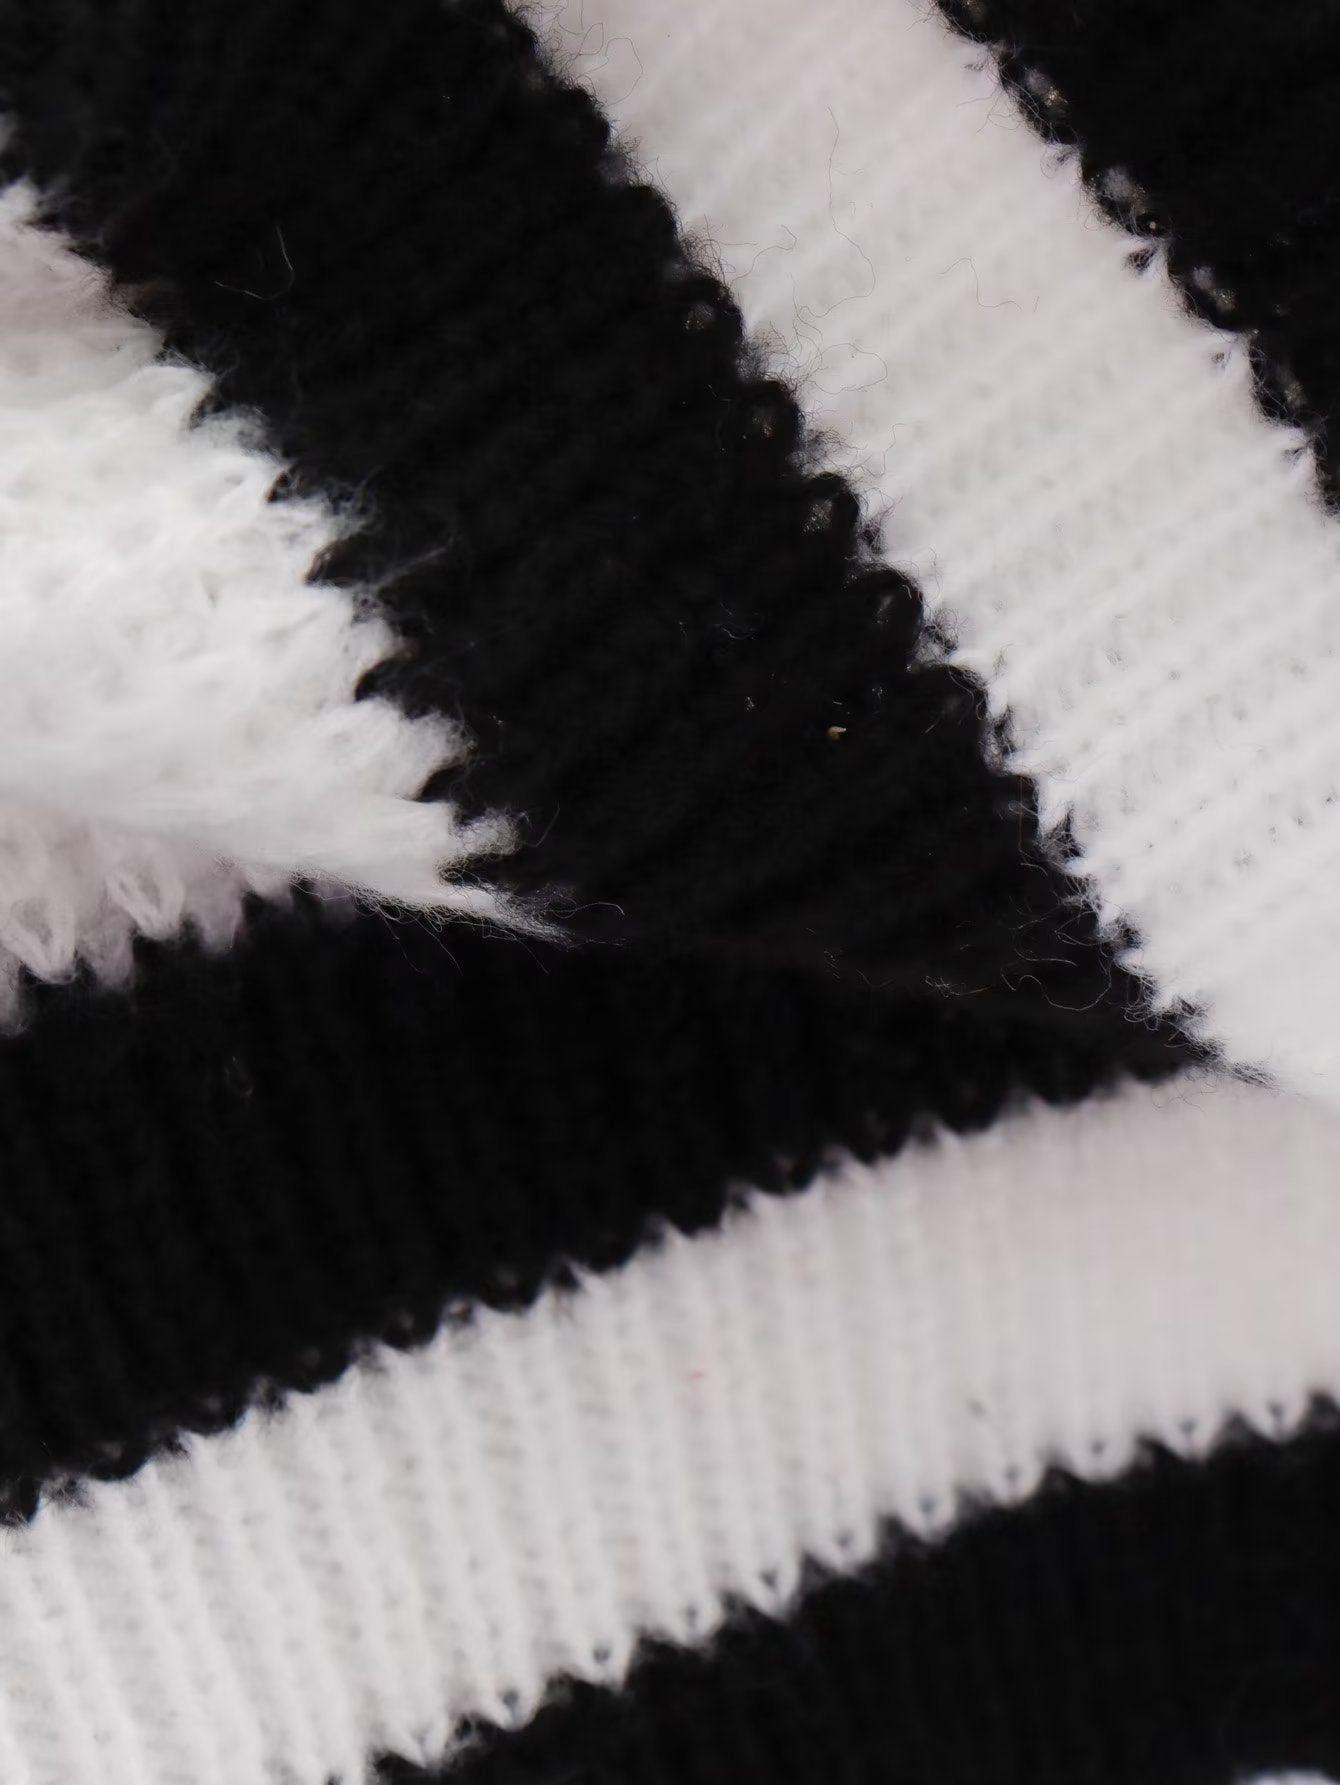 Black Stripes Accent Loose White Sweater - Kelly Obi New York